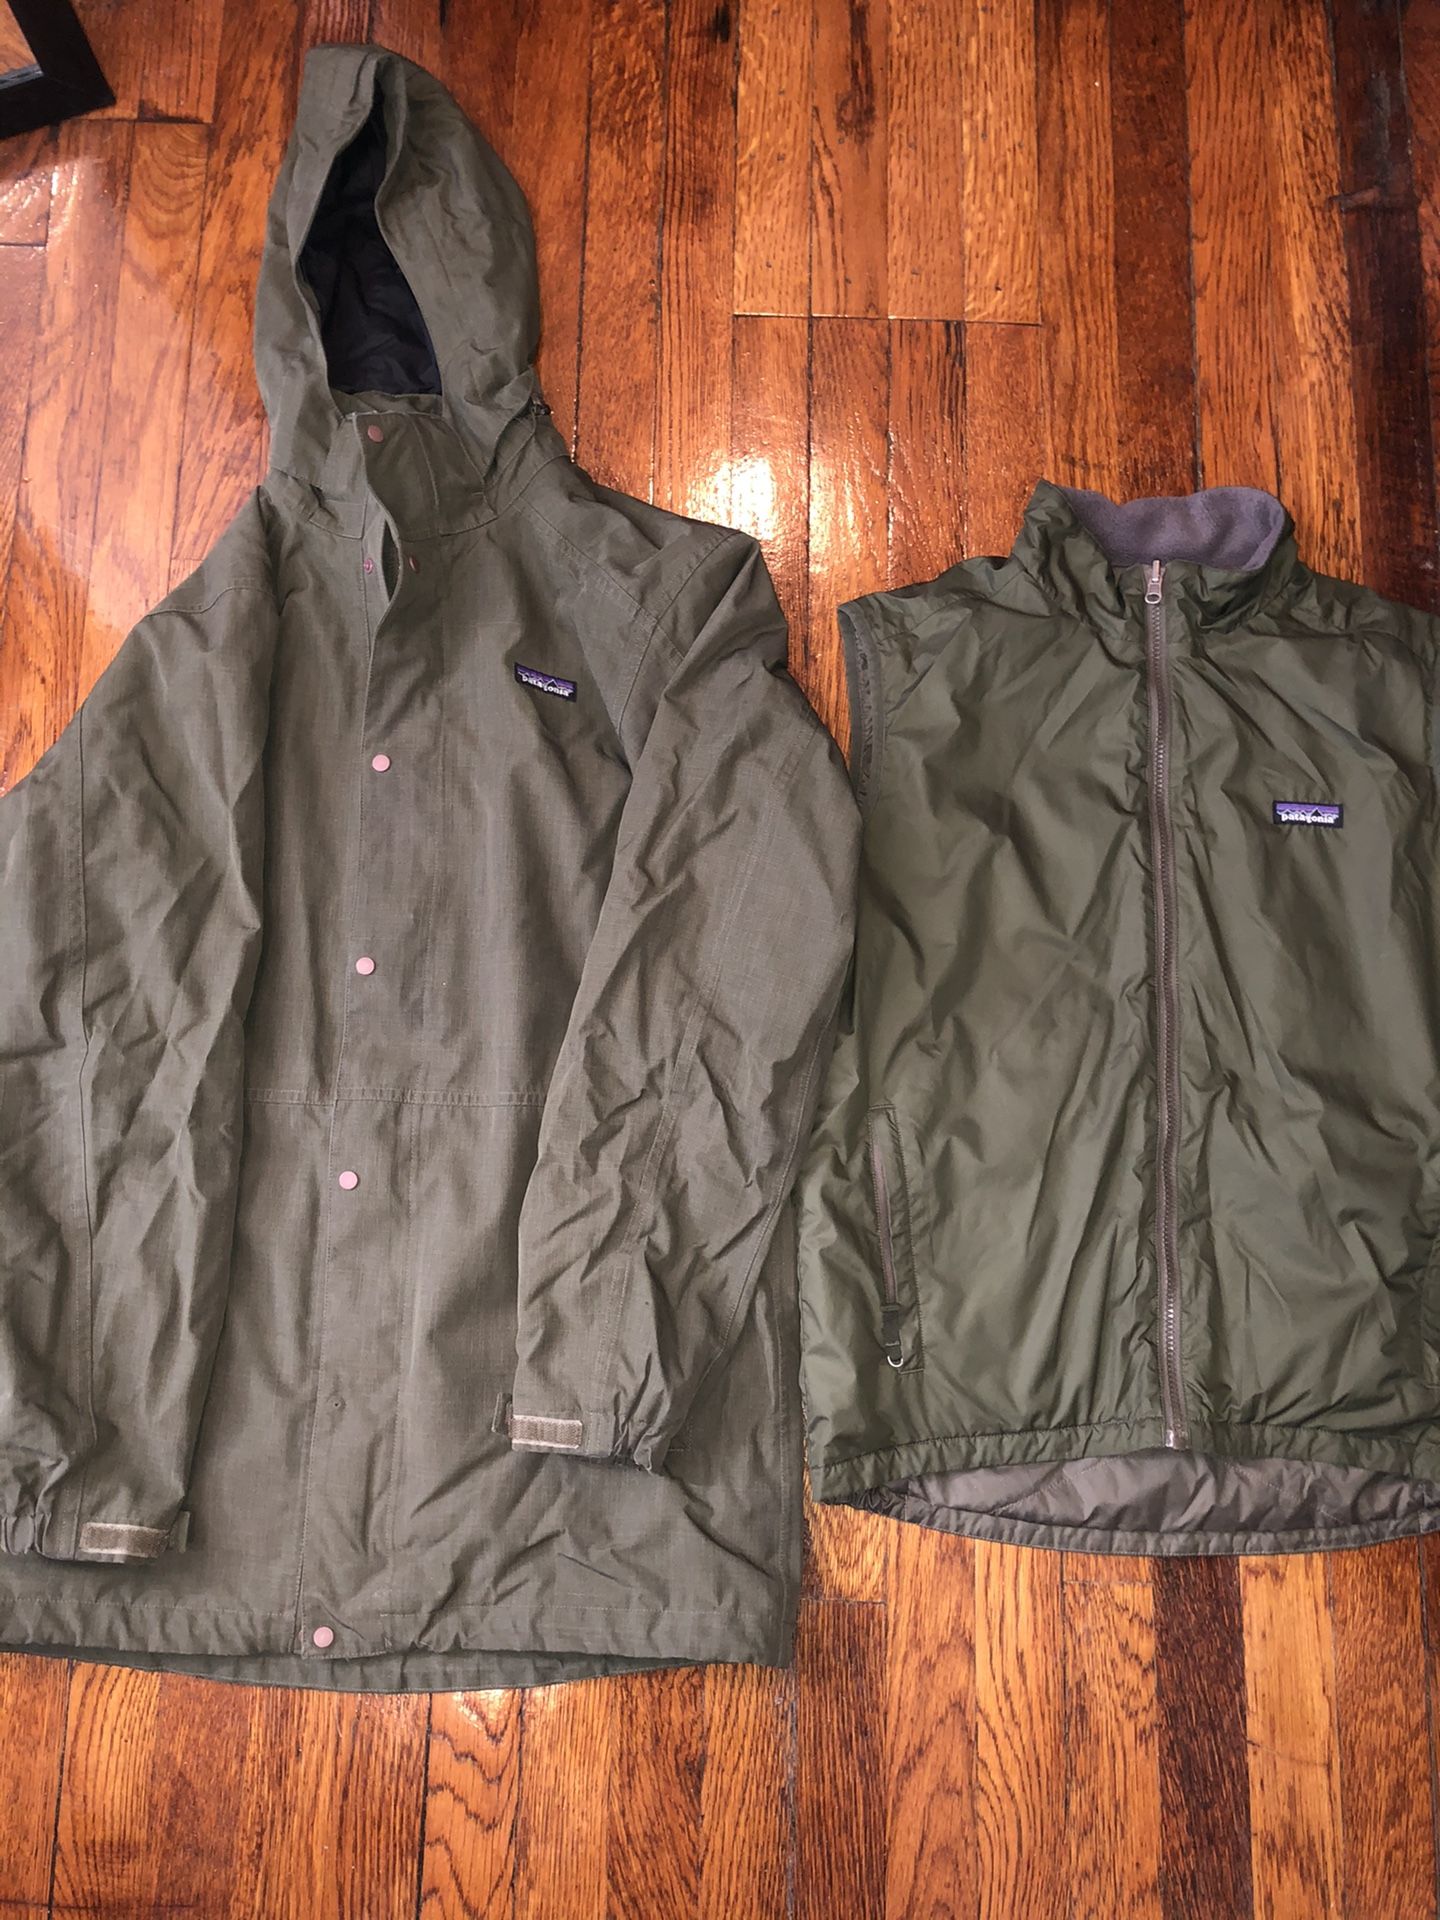 Men’s Medium Patagonia Parka Jacket